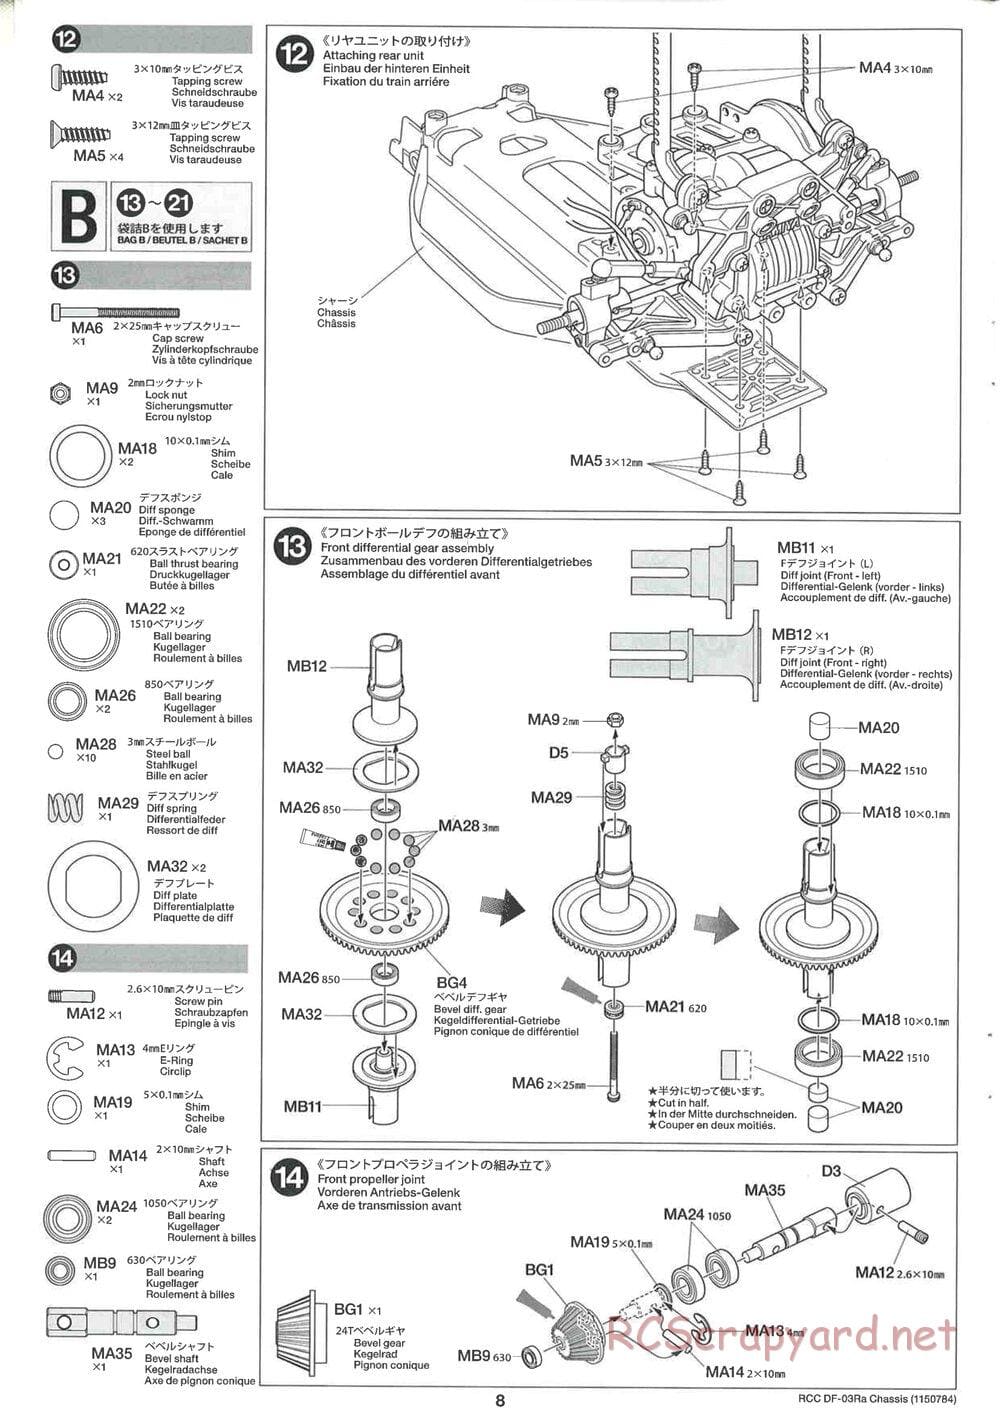 Tamiya - DF-03Ra Chassis - Manual - Page 8